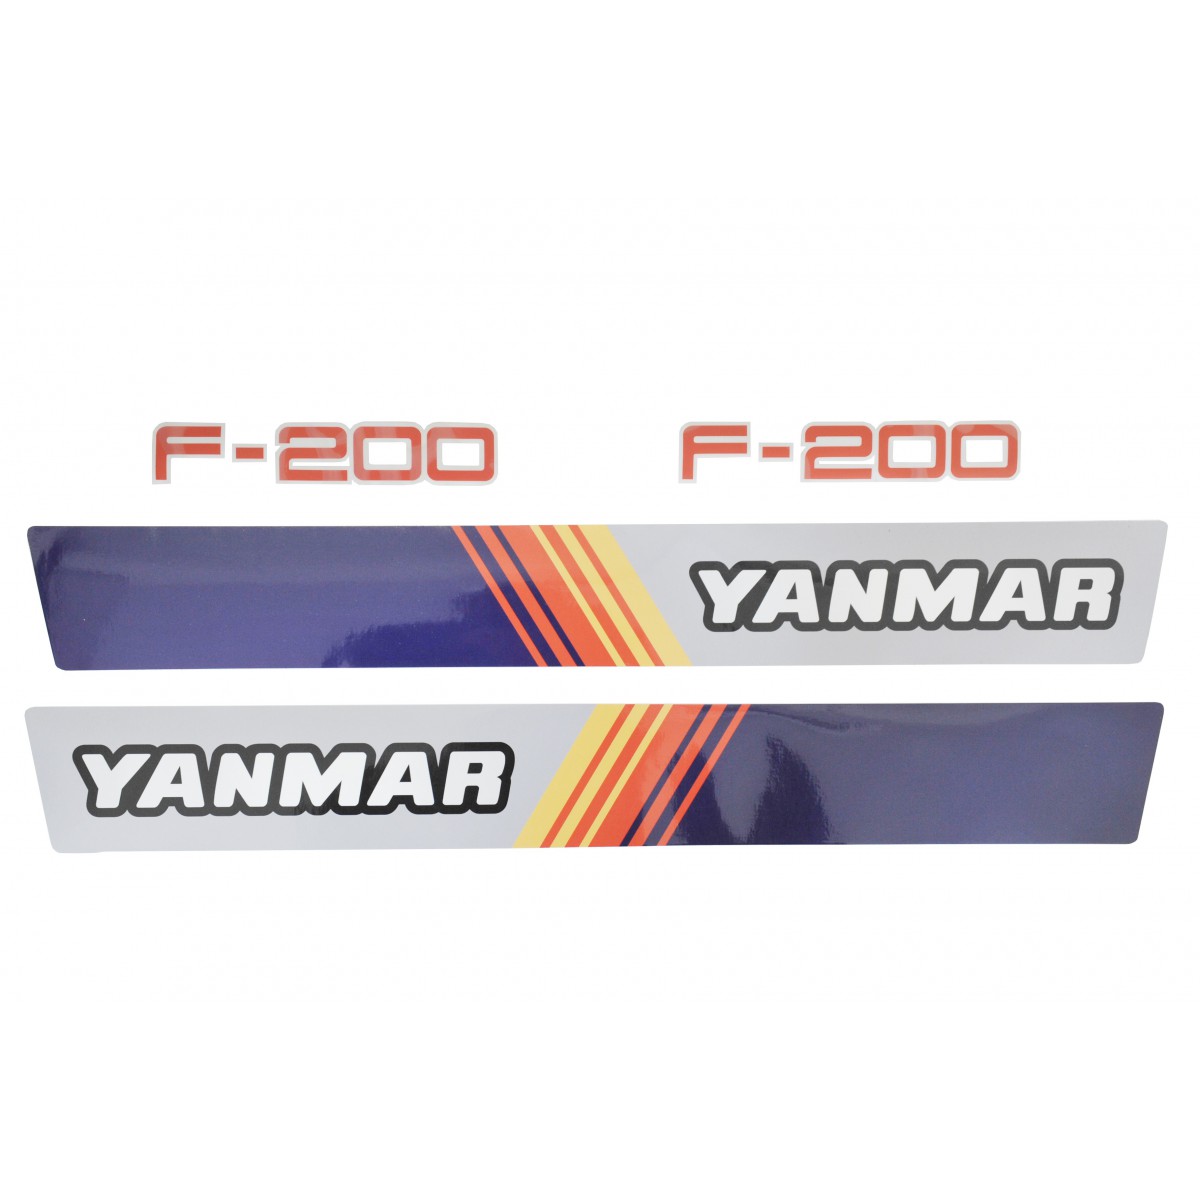 Autocollants Yanmar F-200